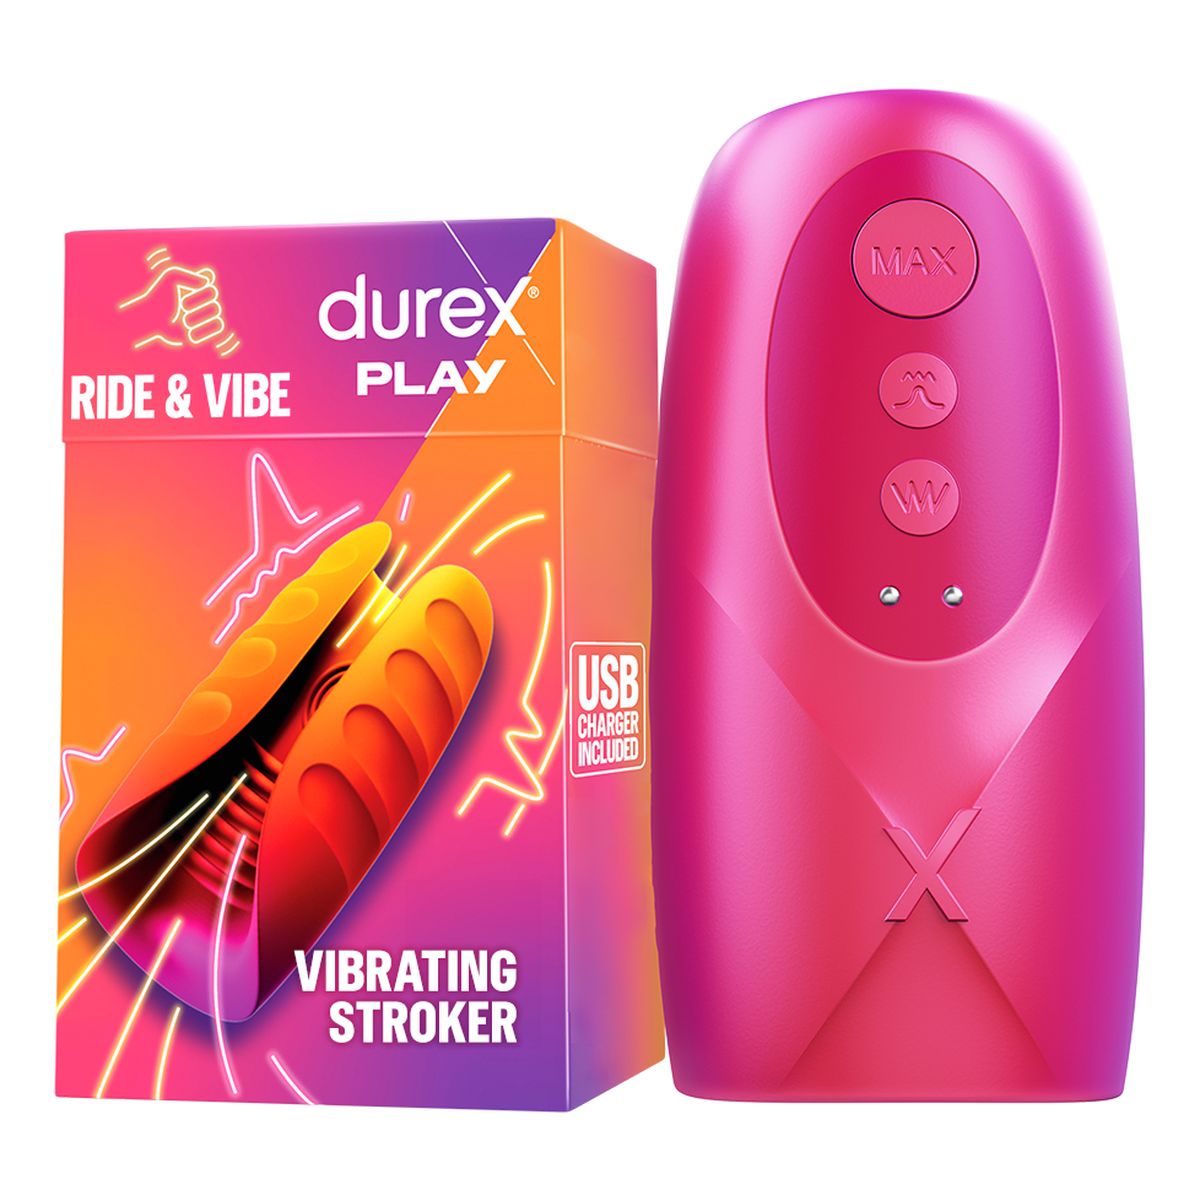 Durex Play ride vibe stymulujący masturbator męski